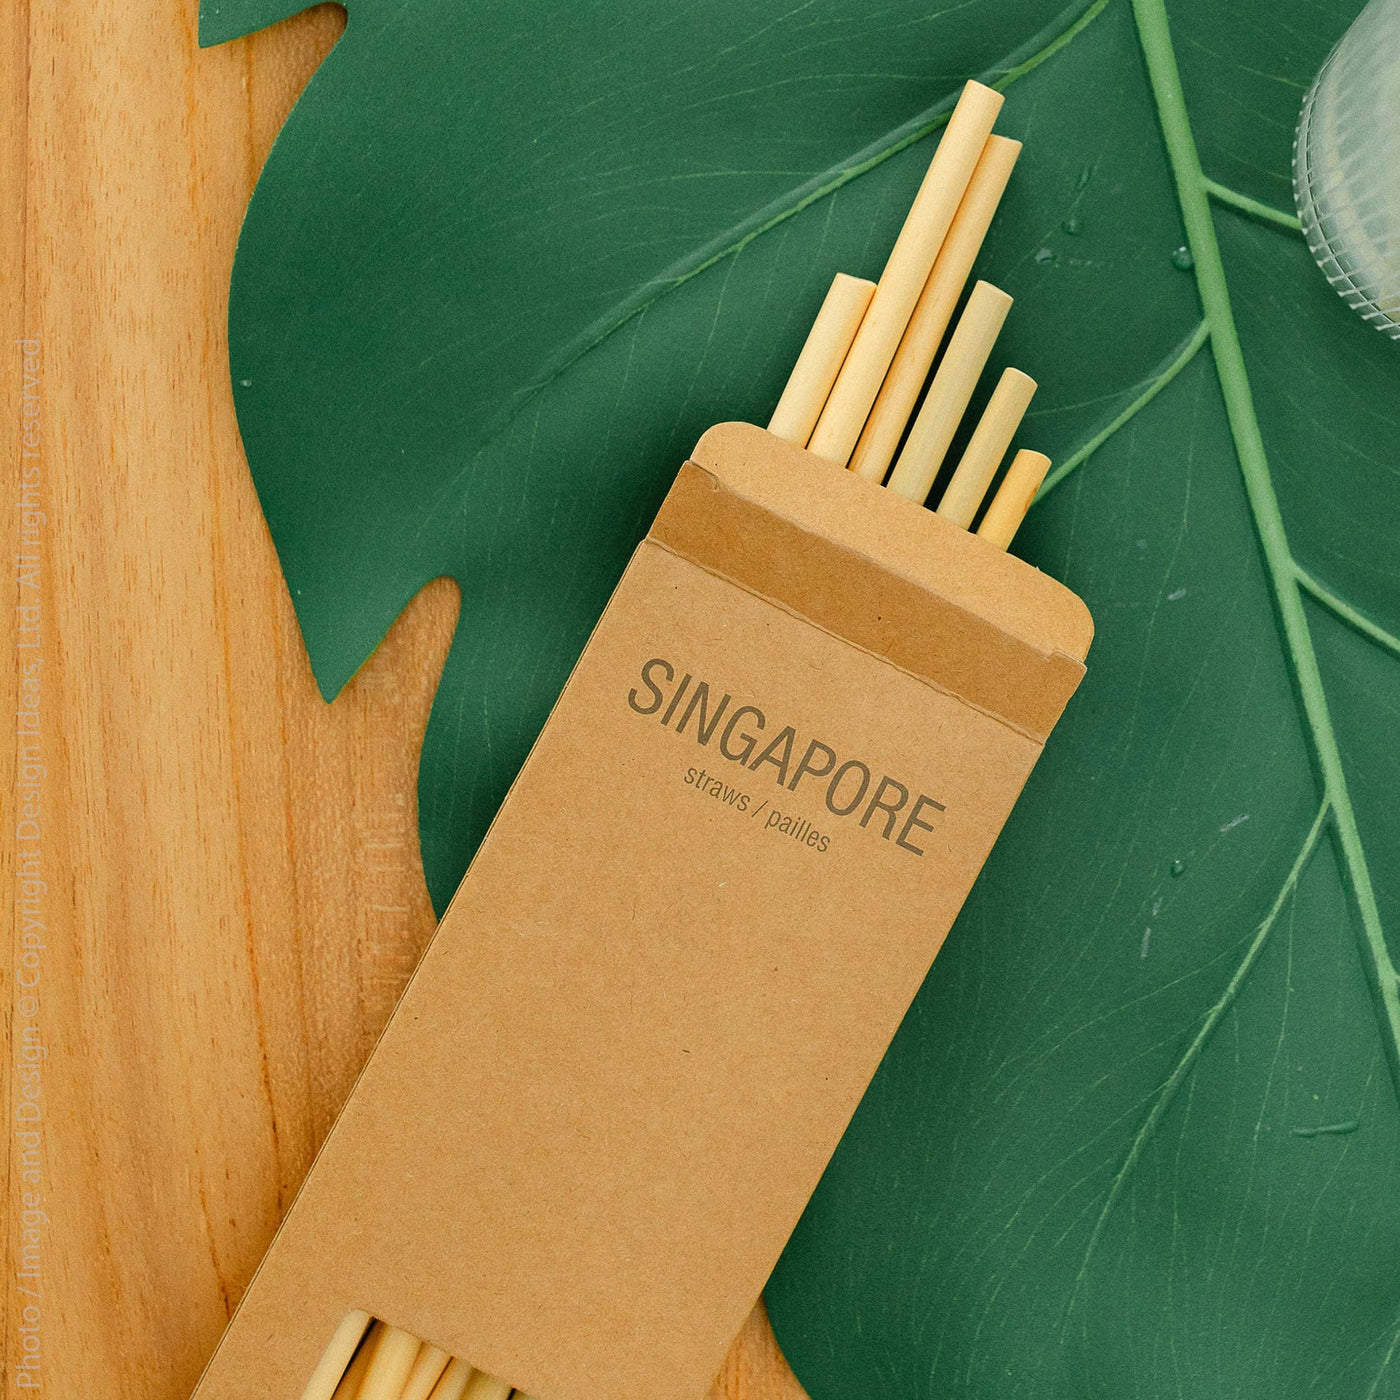 Singaoire Bamboo Straws